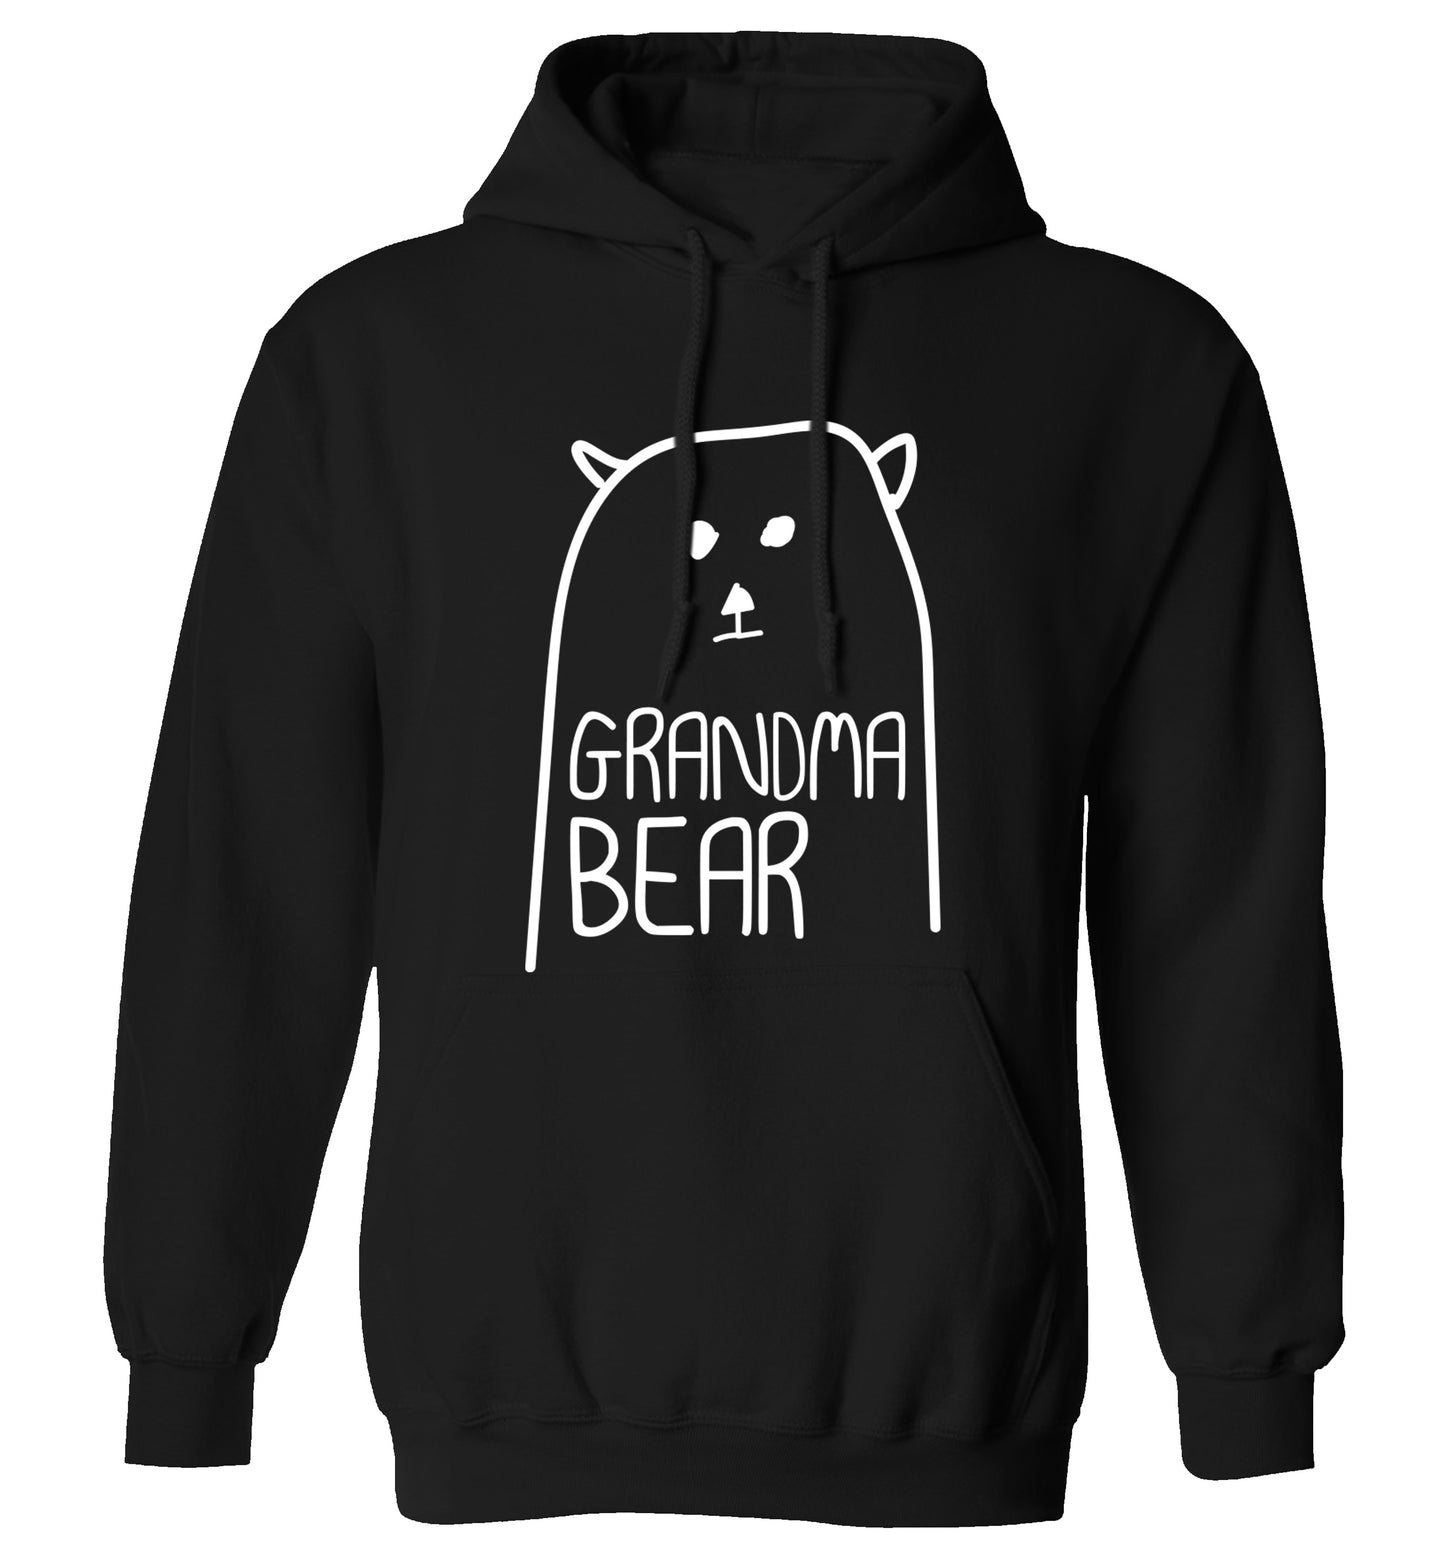 Grandma bear adults unisex black hoodie 2XL